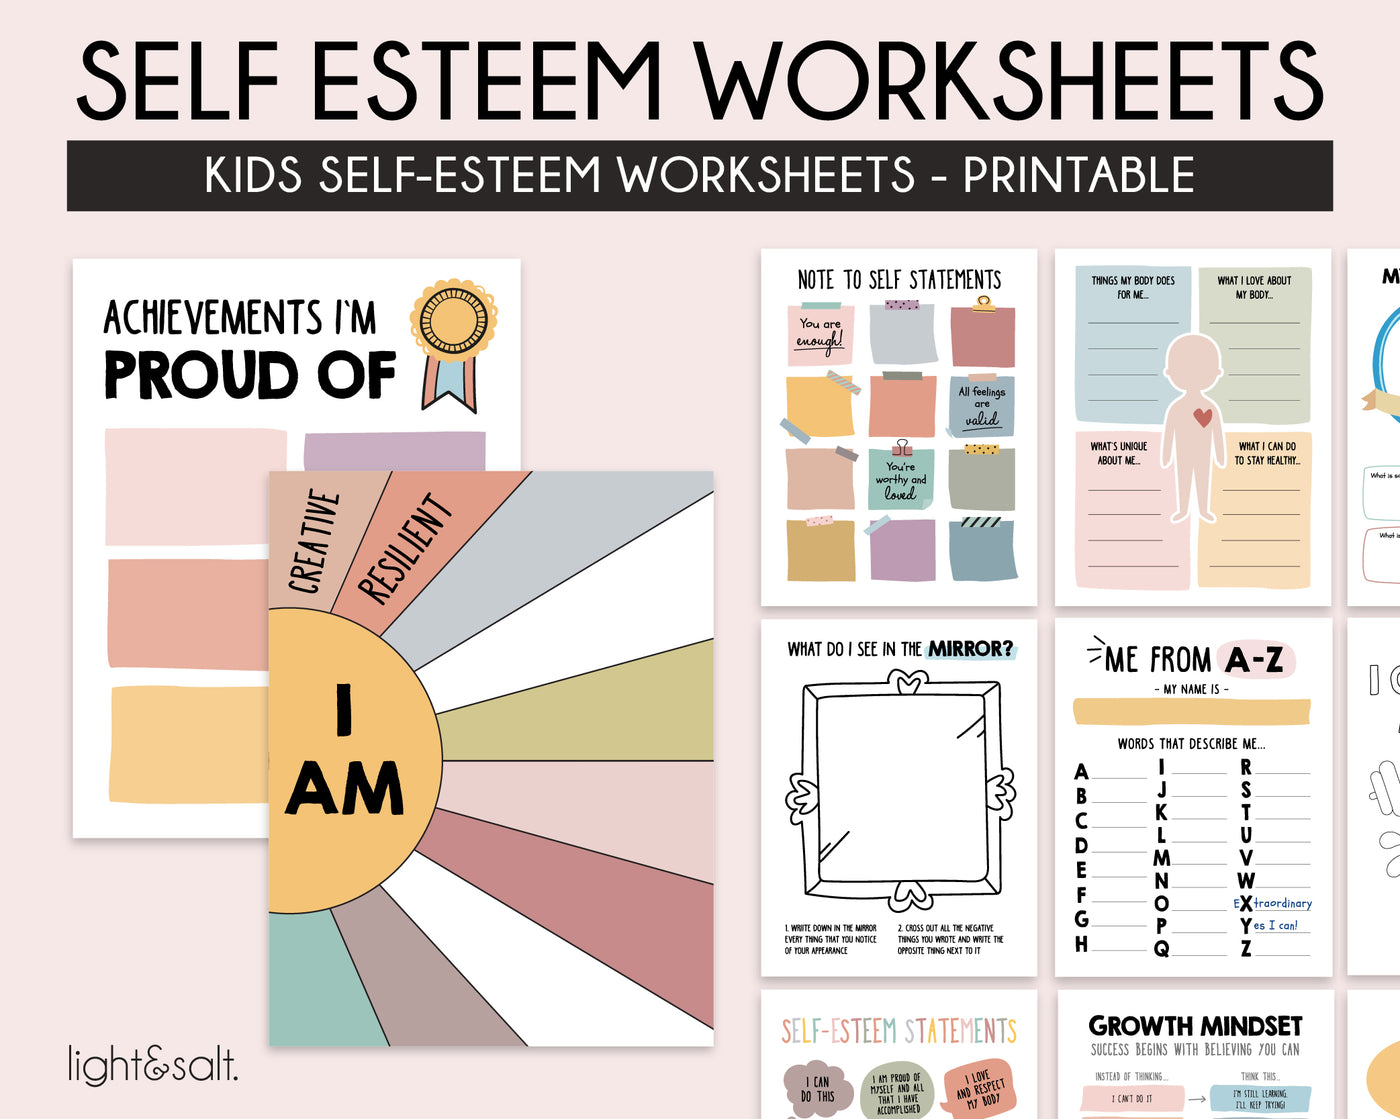 Self esteem worksheets for kids and teens